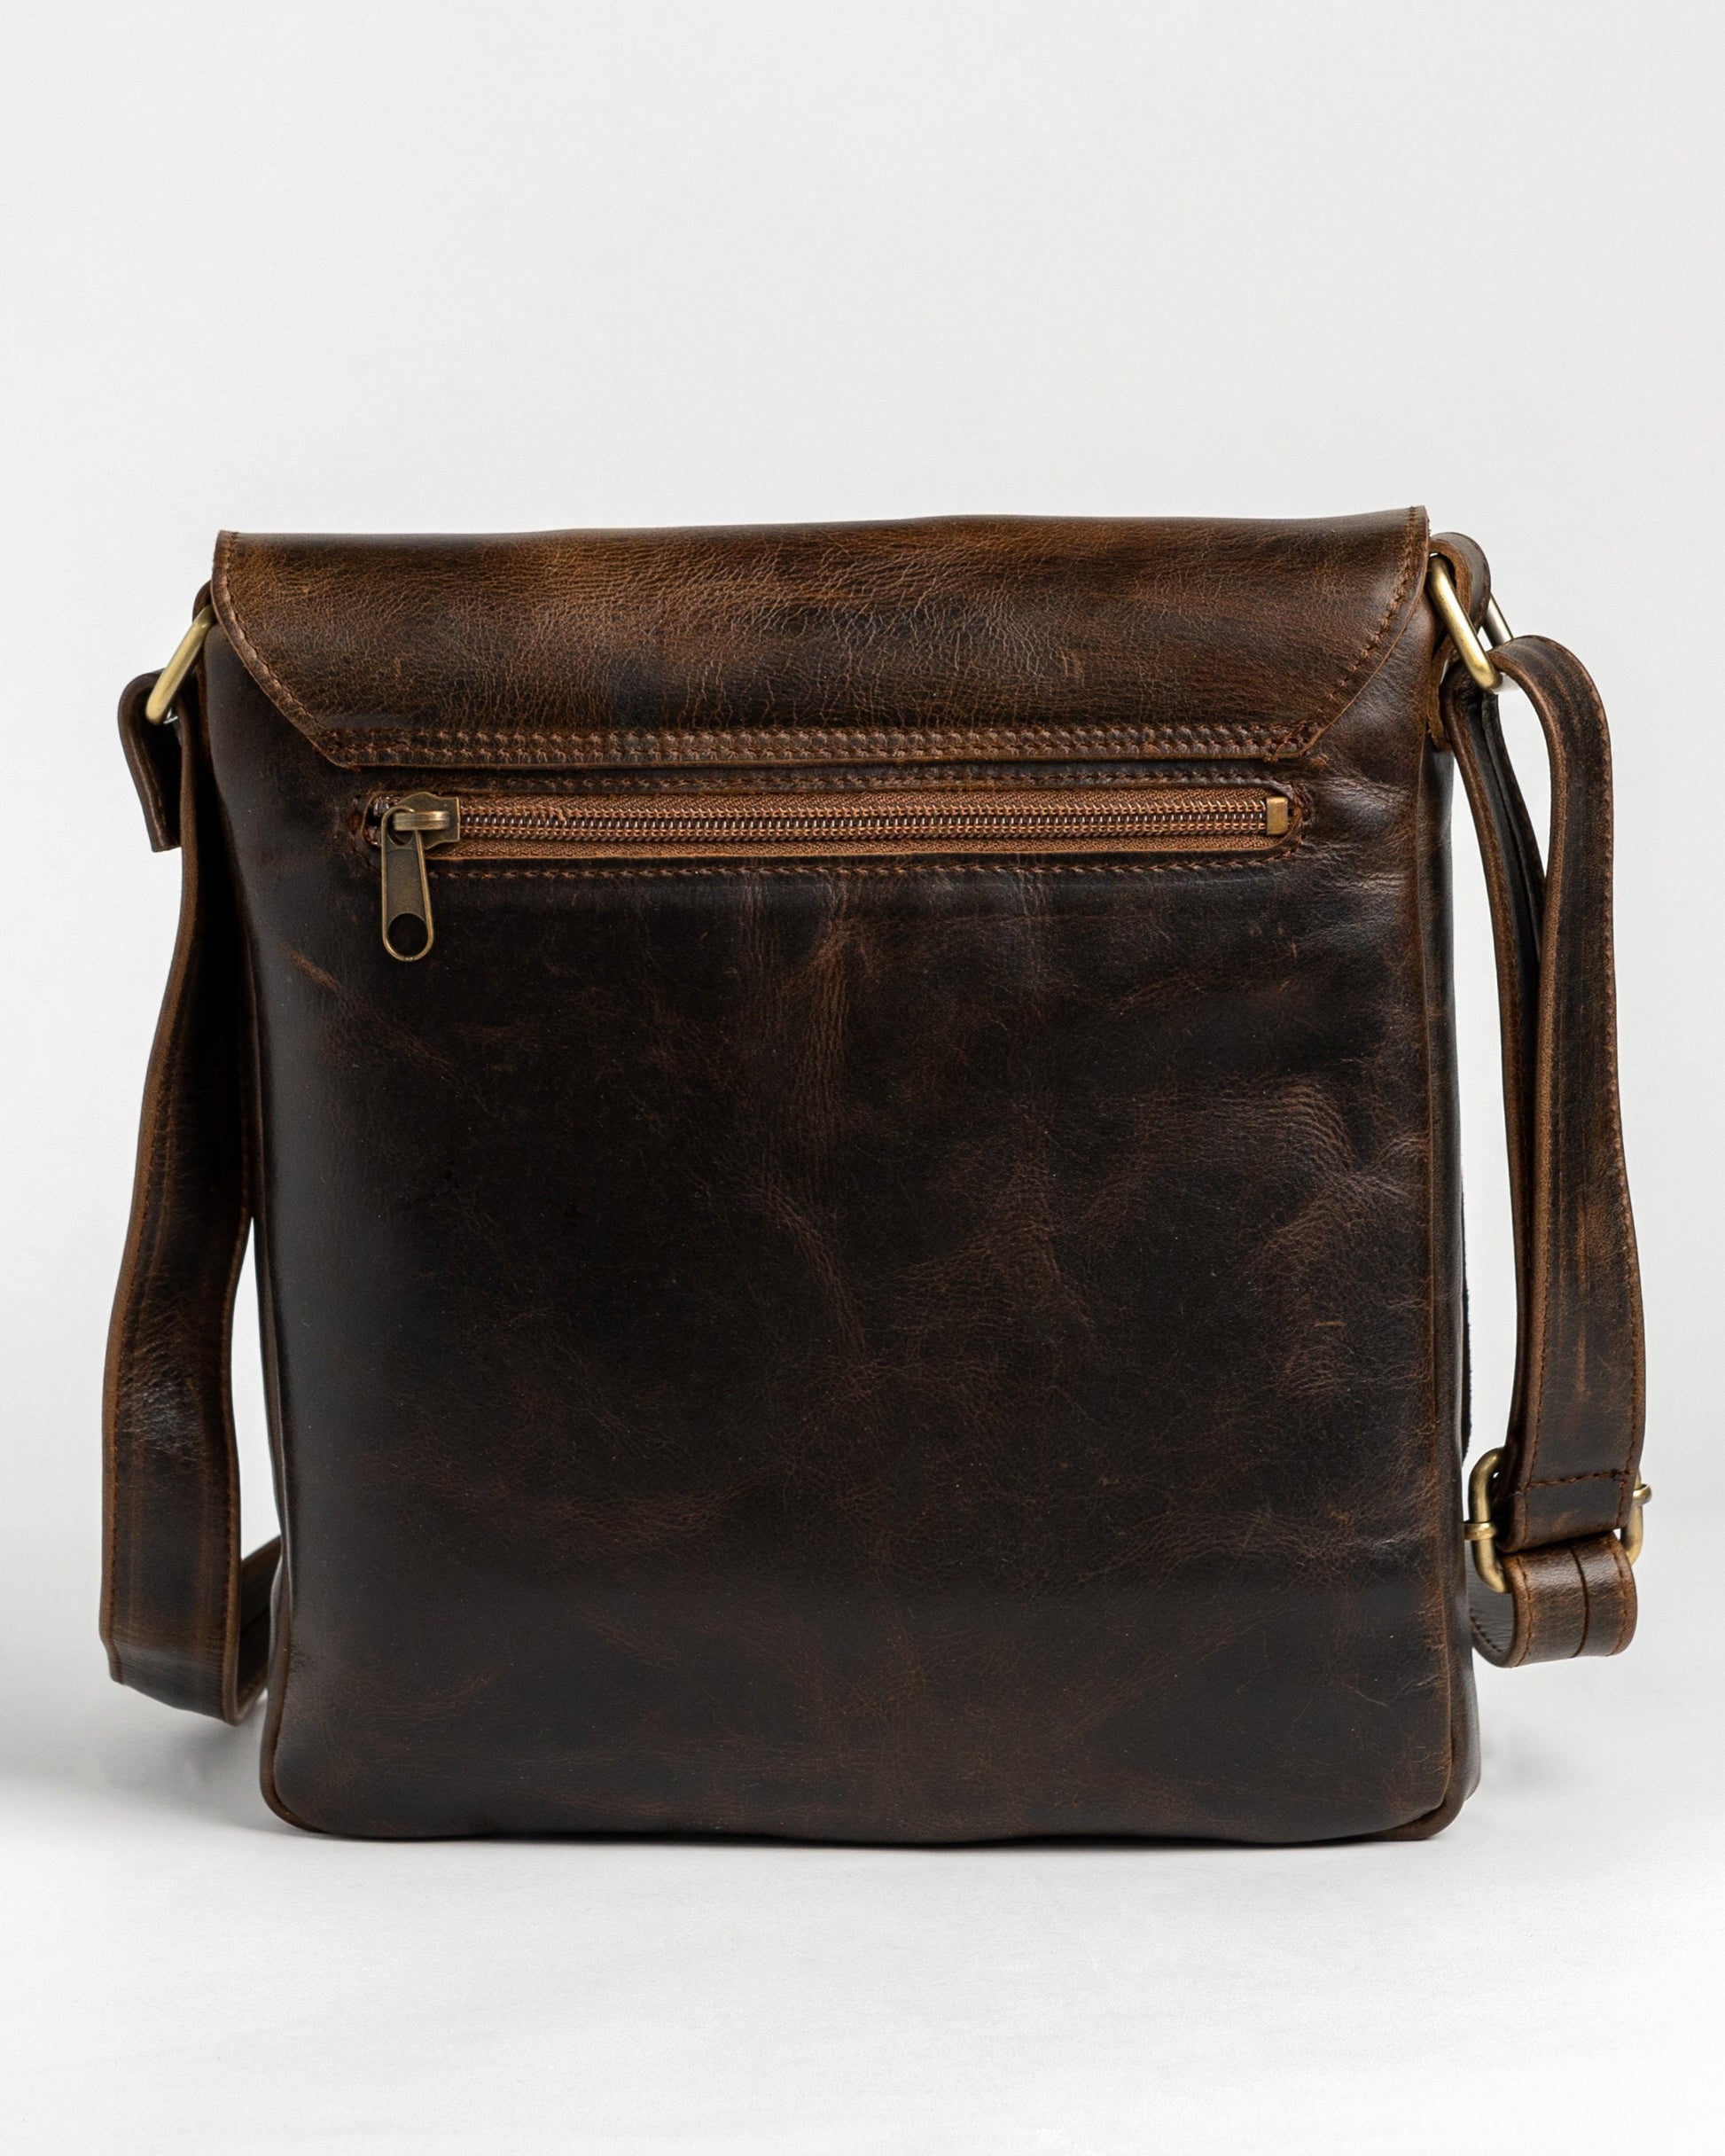 Minimalist leather messenger bag men, Stylish leather crossbody bag, Rugged leather satchel for men